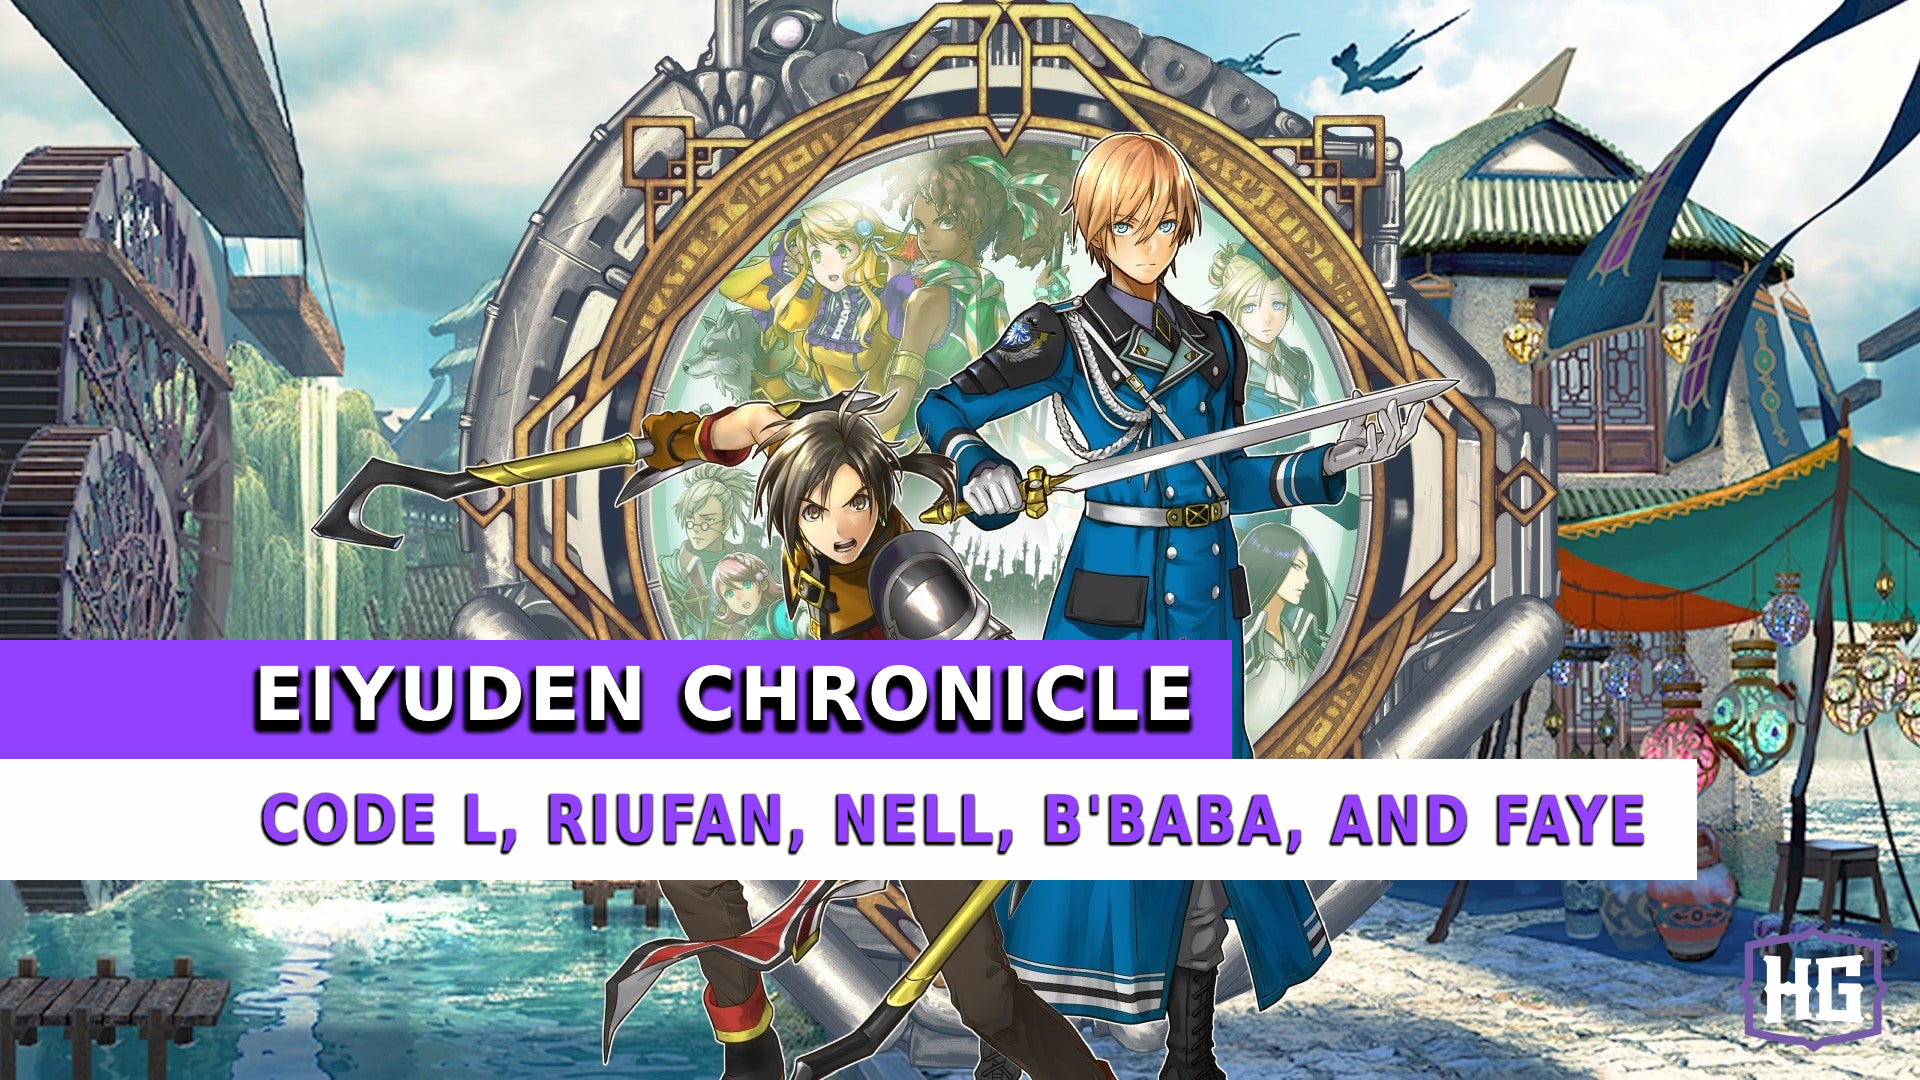 Eiyuden Chronicle Hundred Heroes Code L, Riufan, Nell, B’baba, and Faye